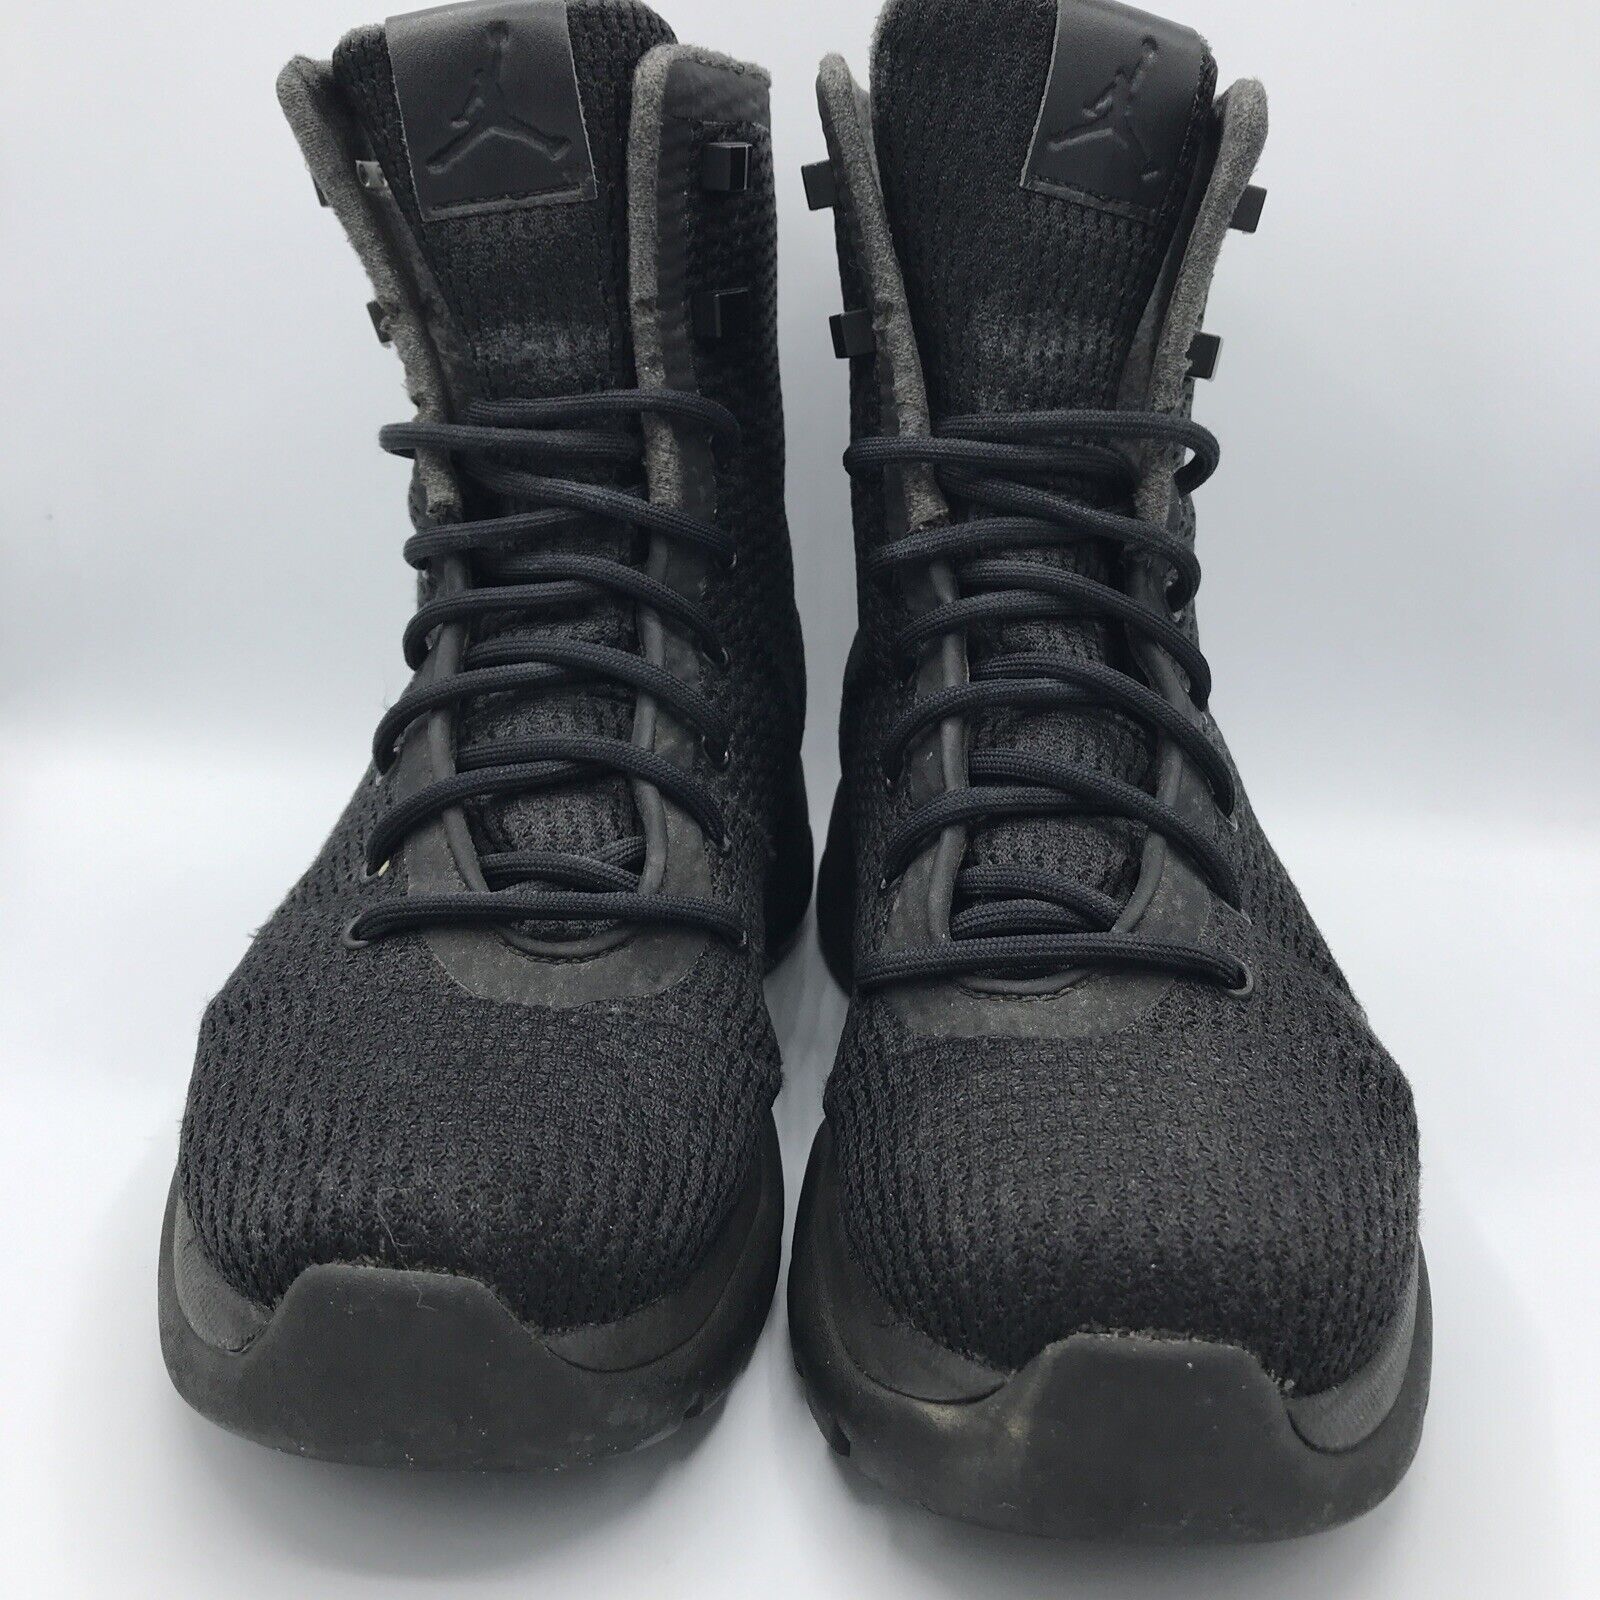 Jordan Future Boot Waterproof BOOTS Black Dark Grey 854554-002 Mens Size 9 for sale online |